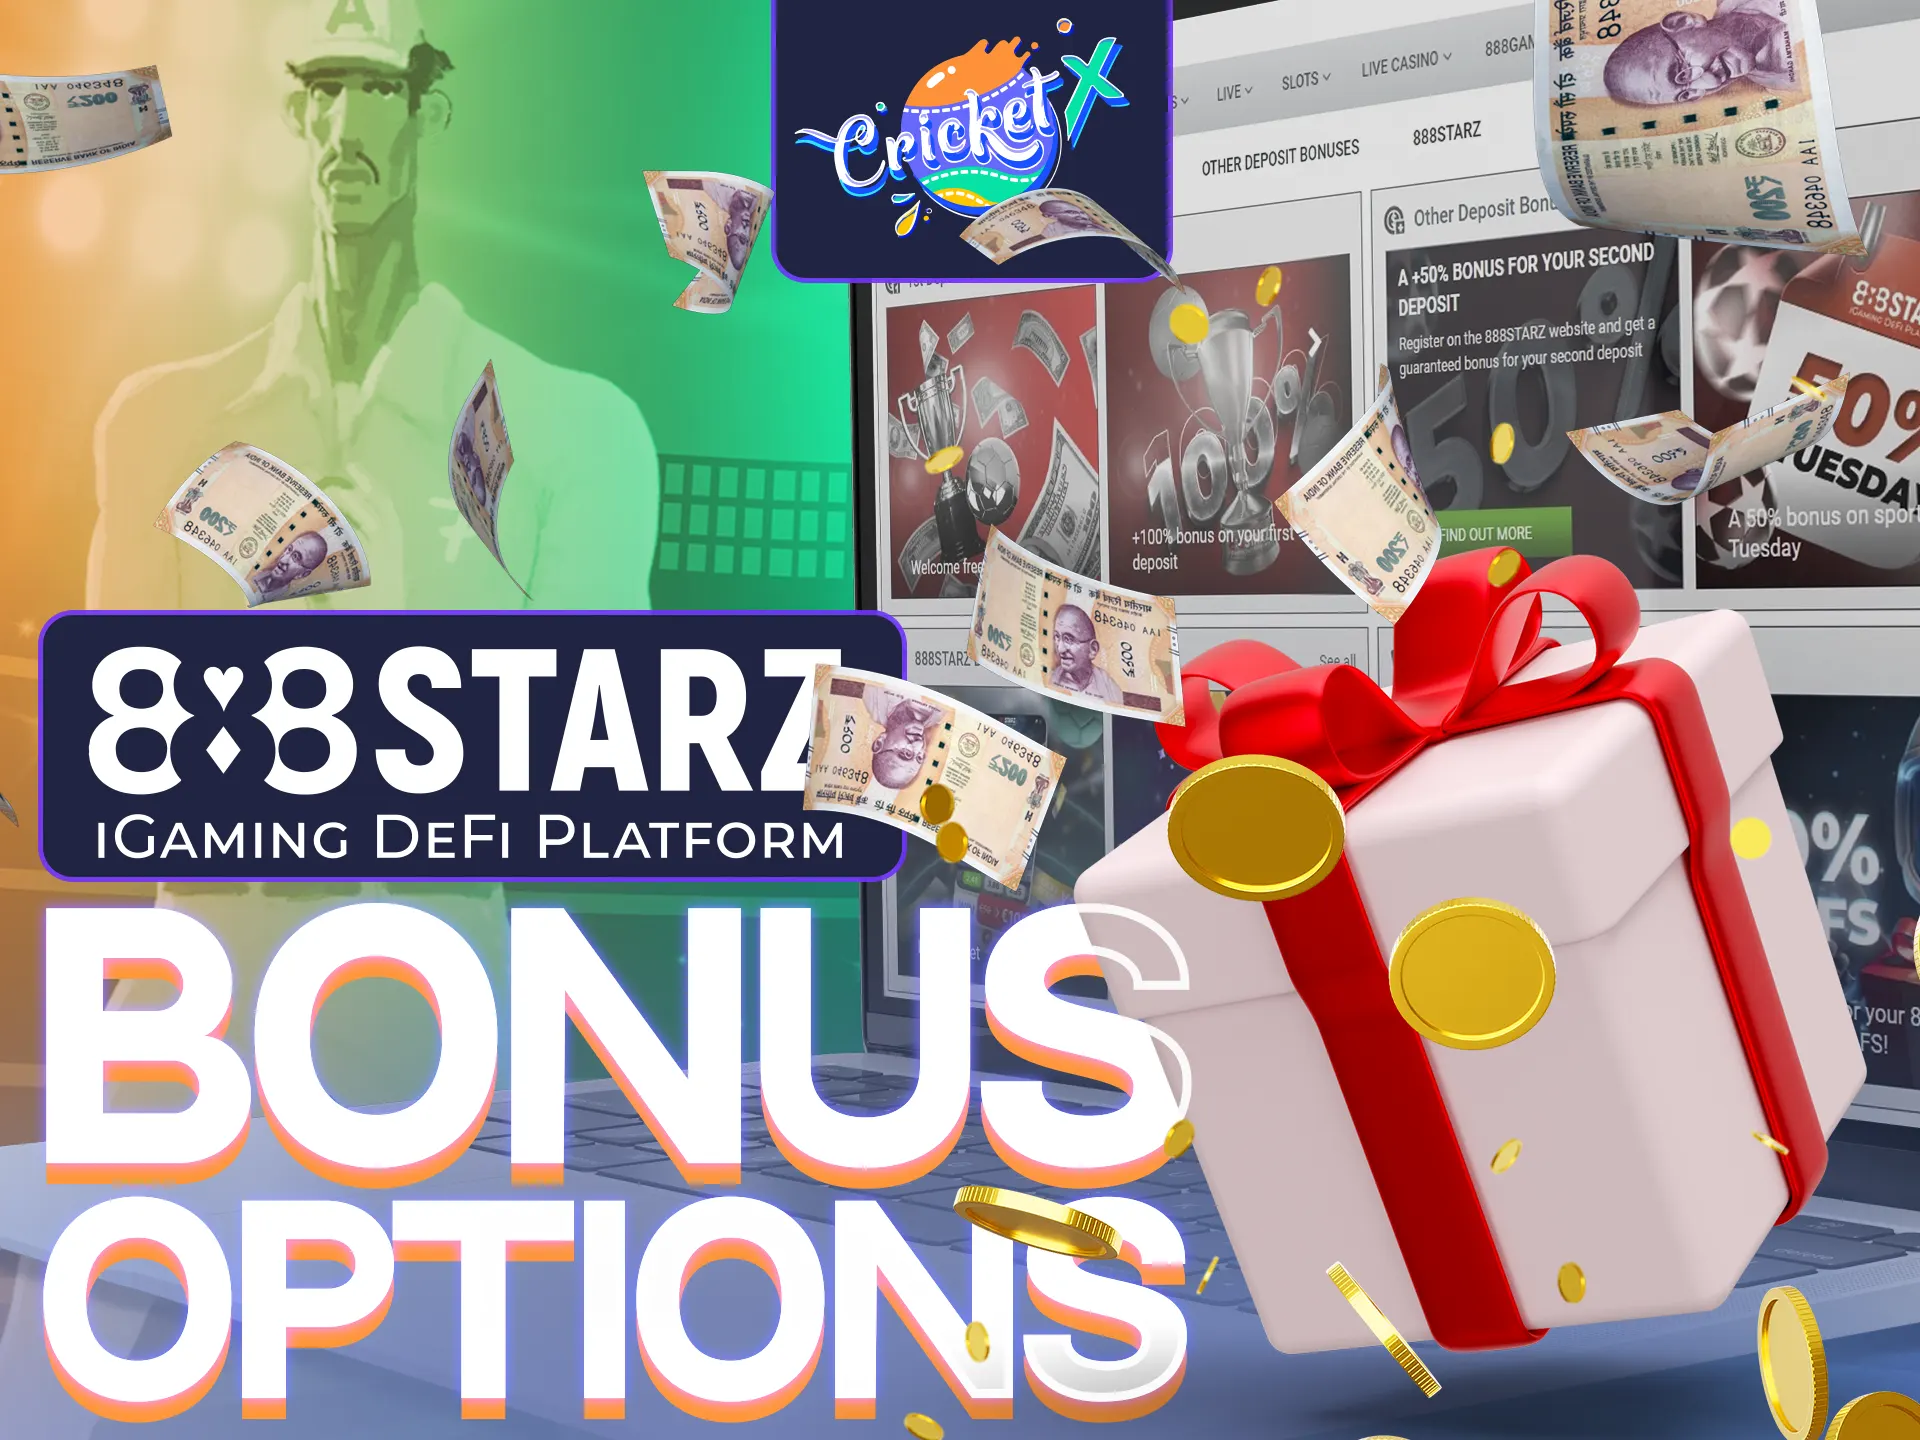 888Starz provides lucrative bonuses for Cricket X players.